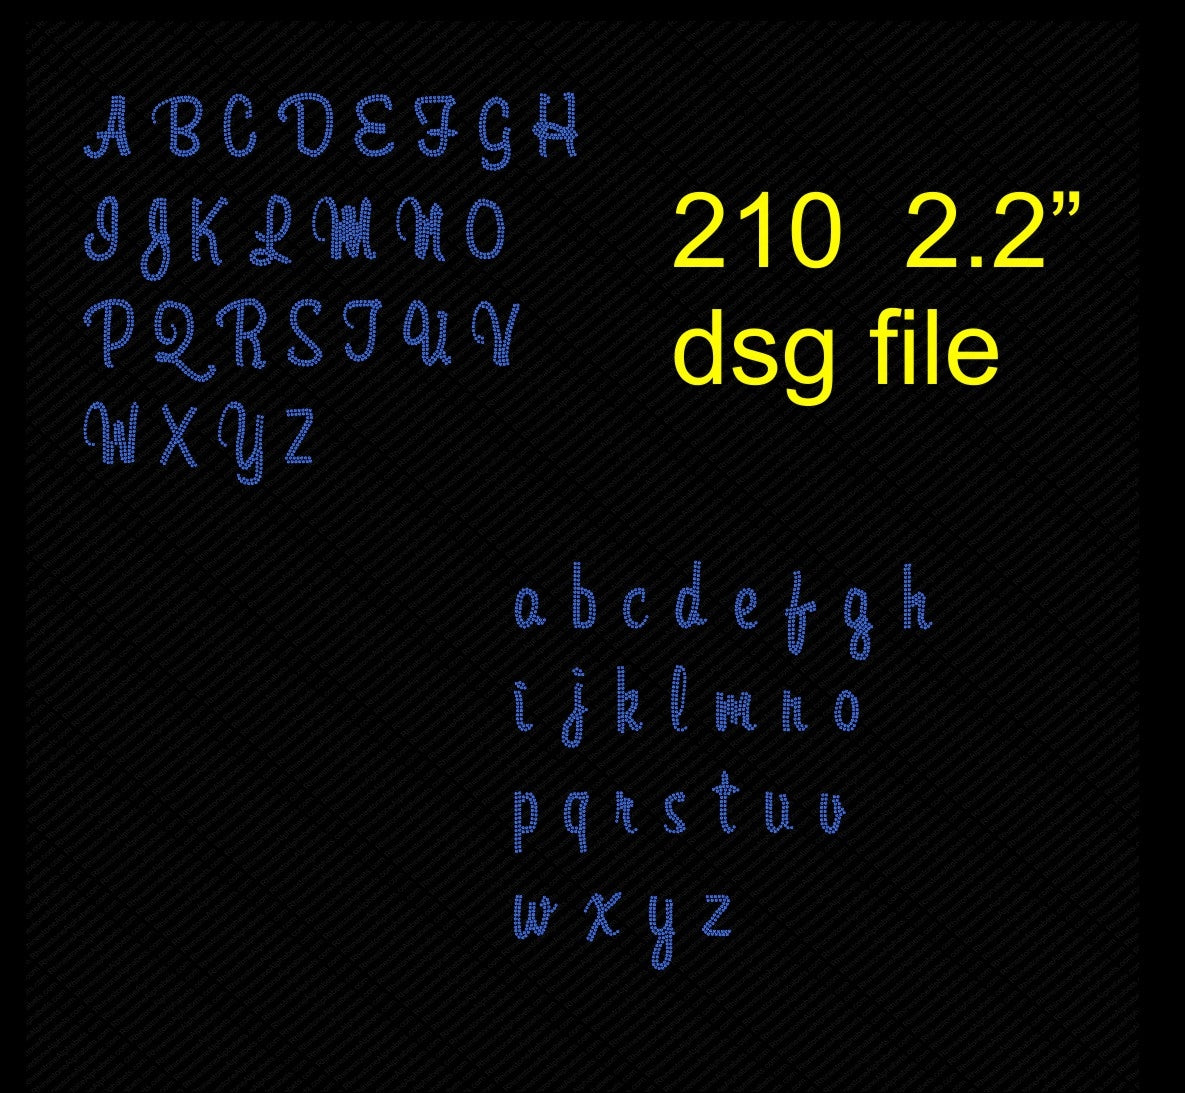 210 dsg file ,TTF Rhinestone Fonts & Rhinestone Designs